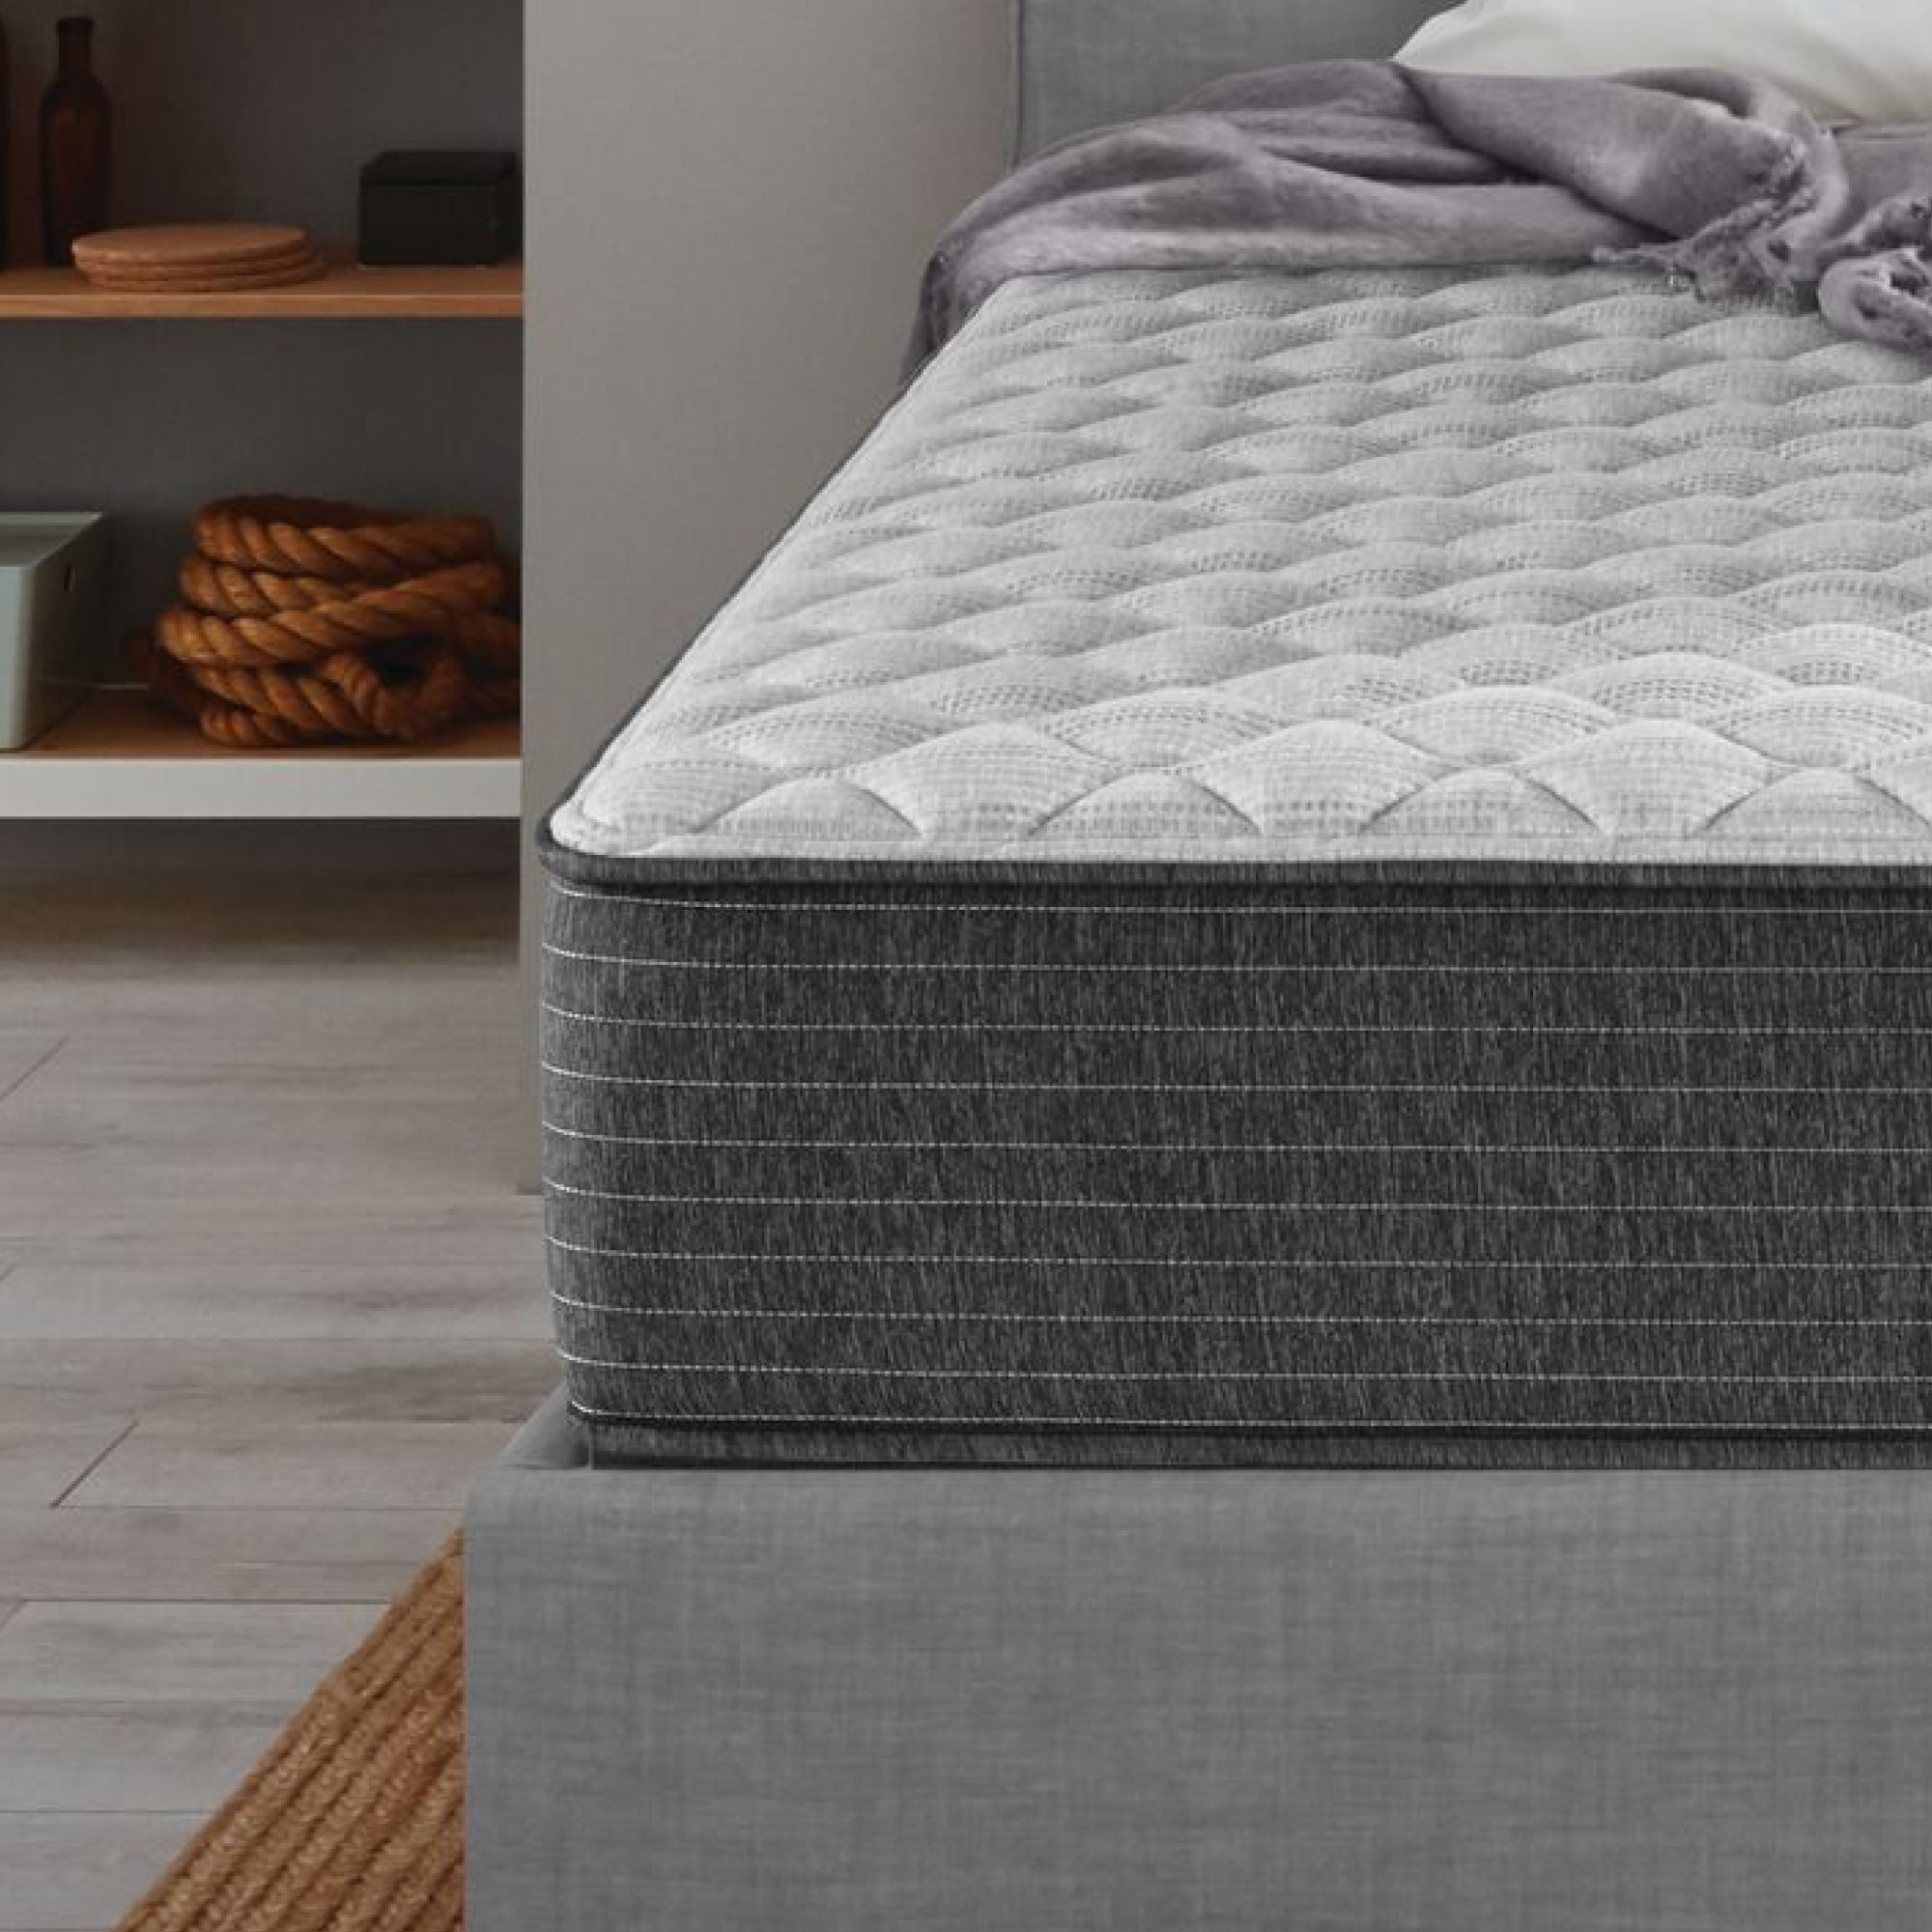 Corner view of the Beautyrest Select mattress ||feel: Firm